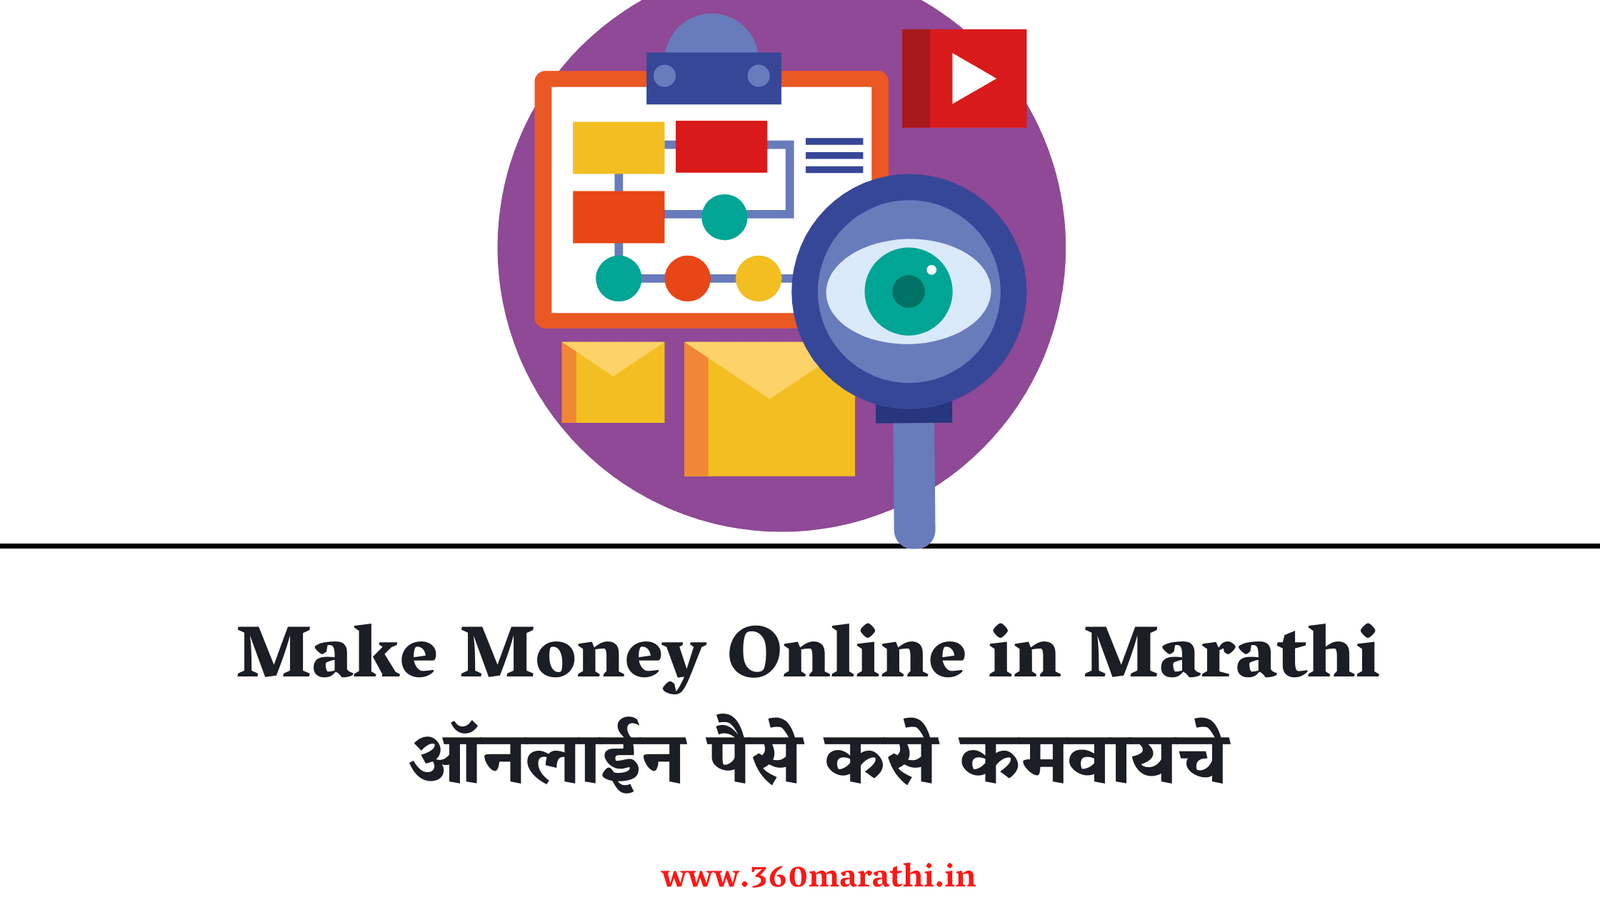 Make Money Online in Marathi ऑनलाईन पैसे कसे कमवायचे